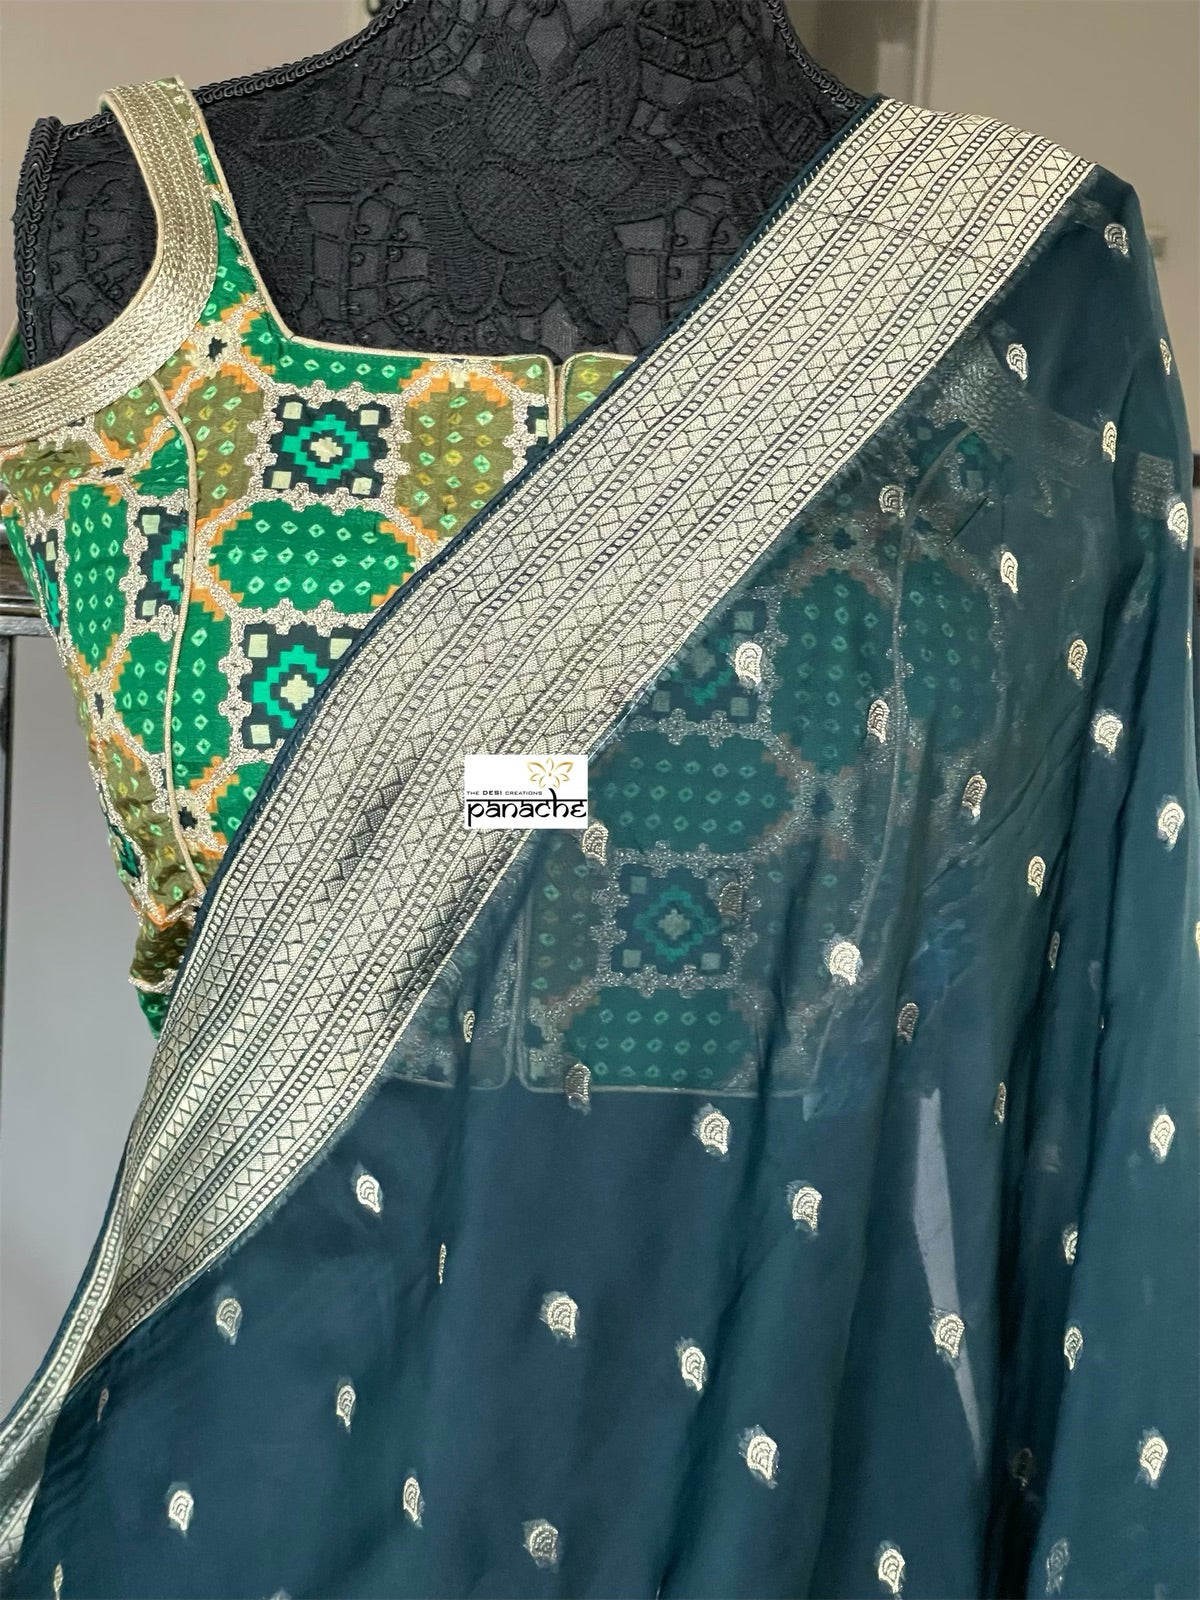 Designer Organza Banaras Saree - Ombré black teal green